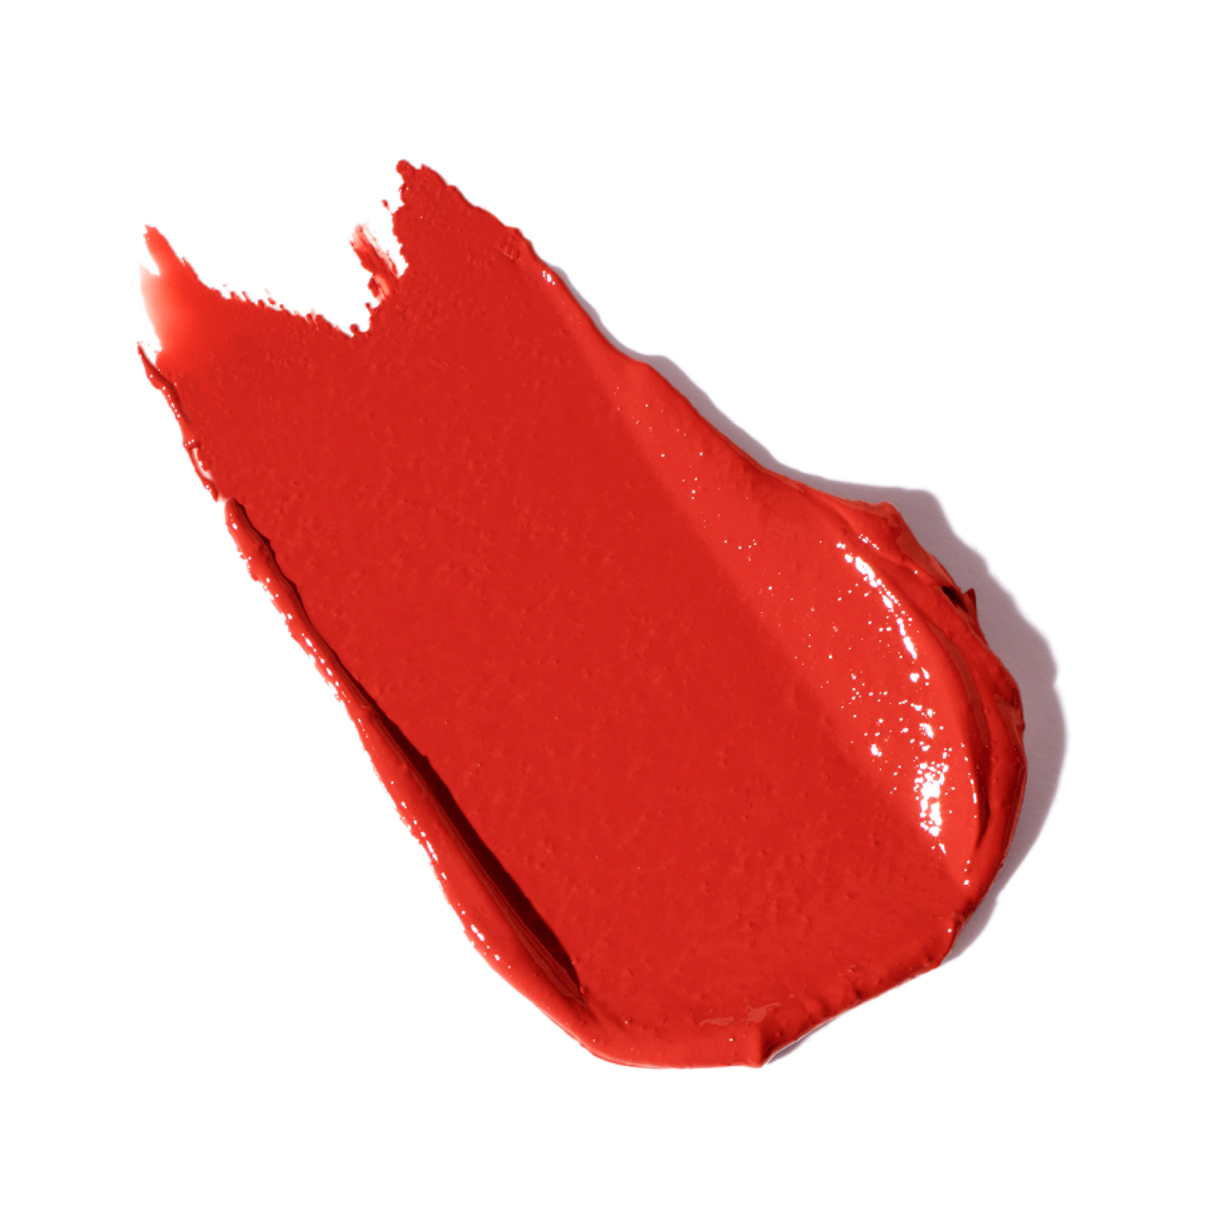 Colorluxe Hydrating Cream Lipstick